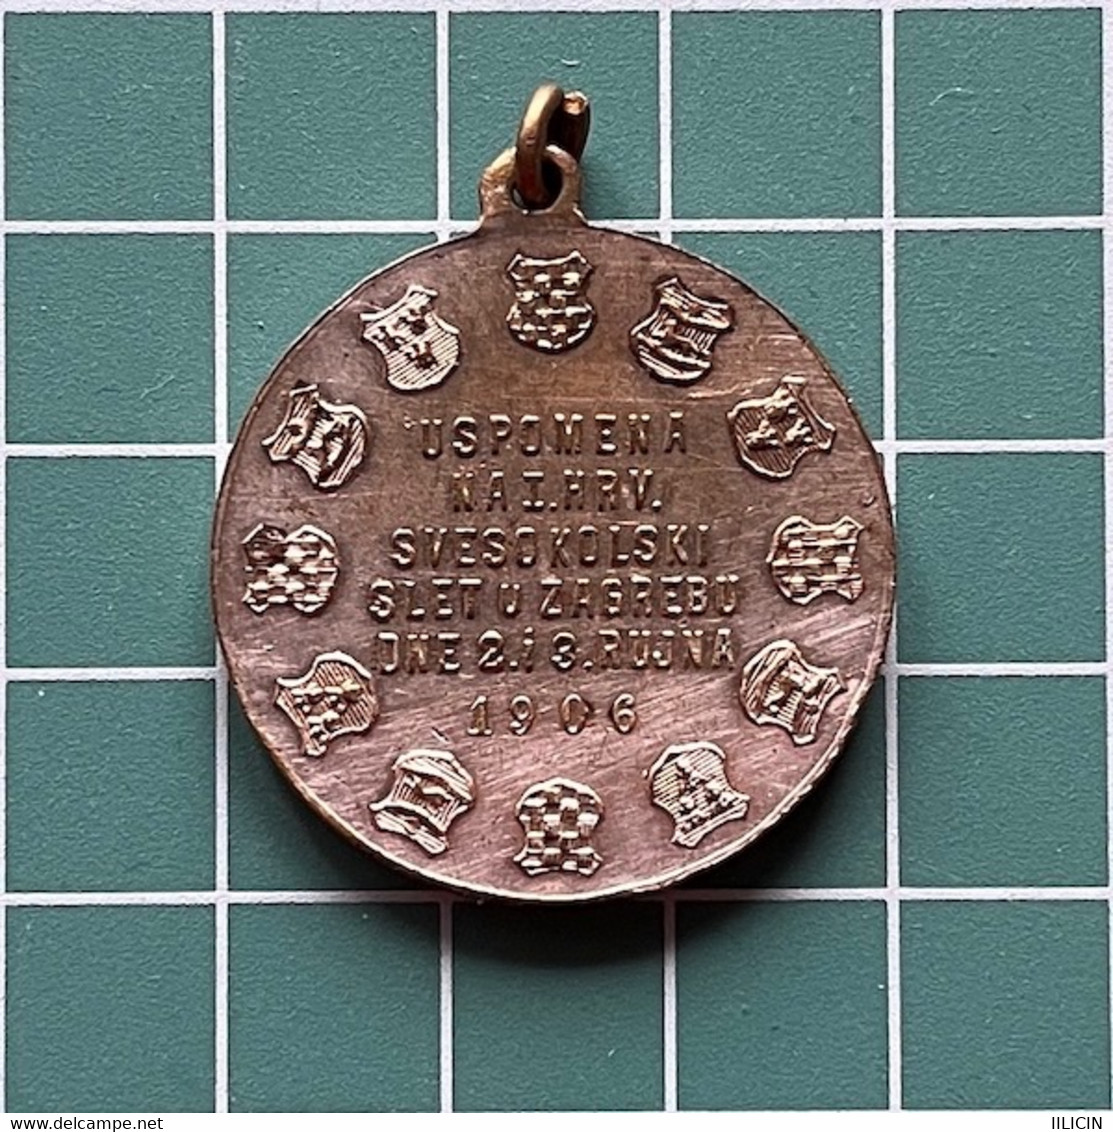 Medal Plaque Plakette PL000175 - Gymnastics Sokol Austria Hungary Croatia Hrvatska Zagreb 1906 - Gymnastics